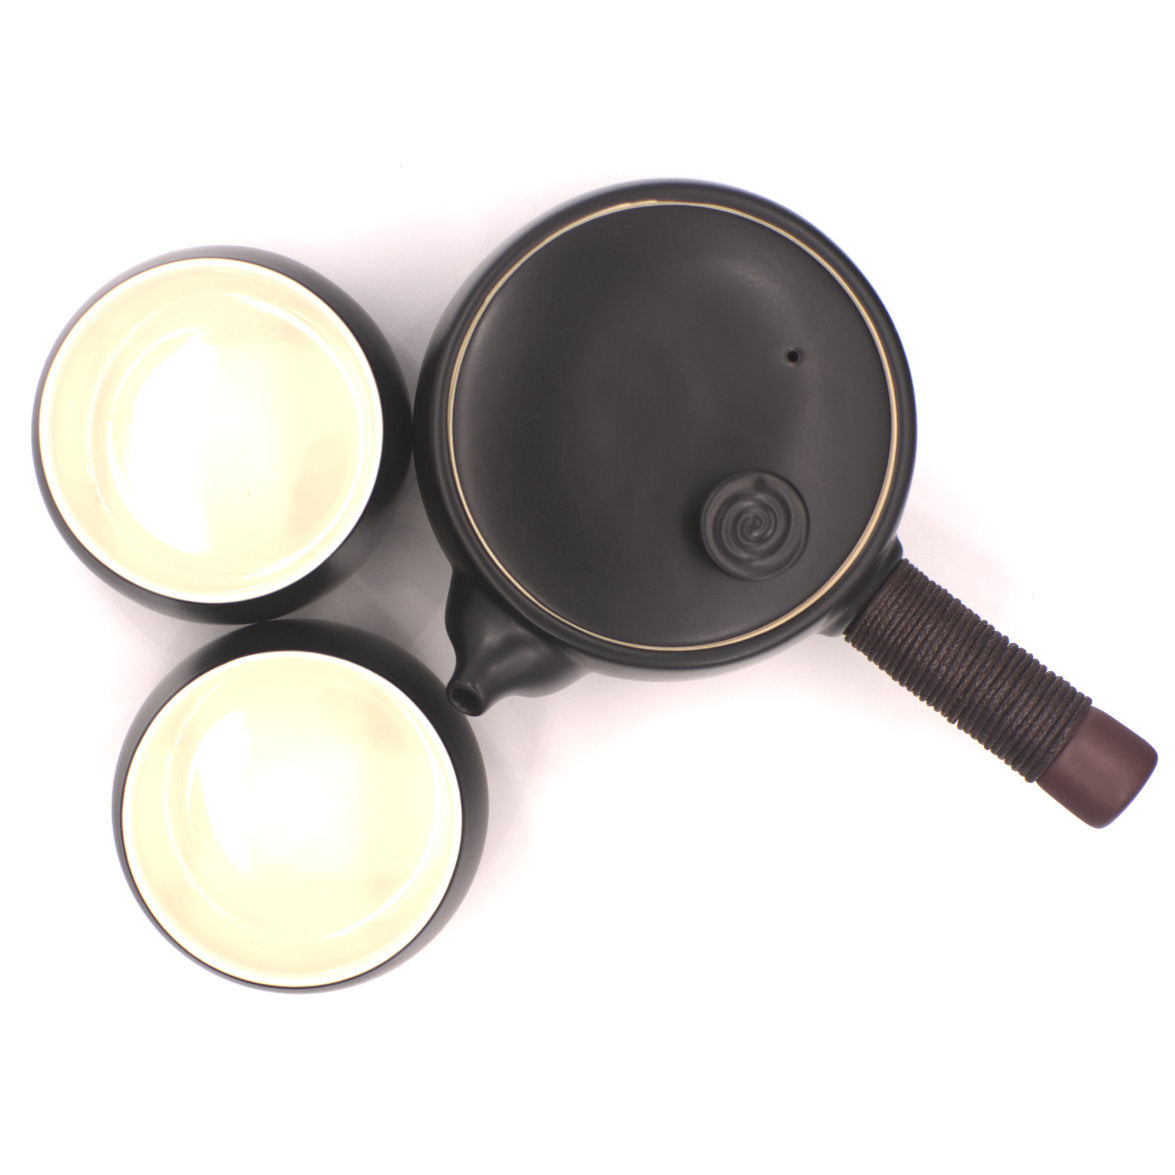 Black Side-Handle Tea Pot with 2 cups